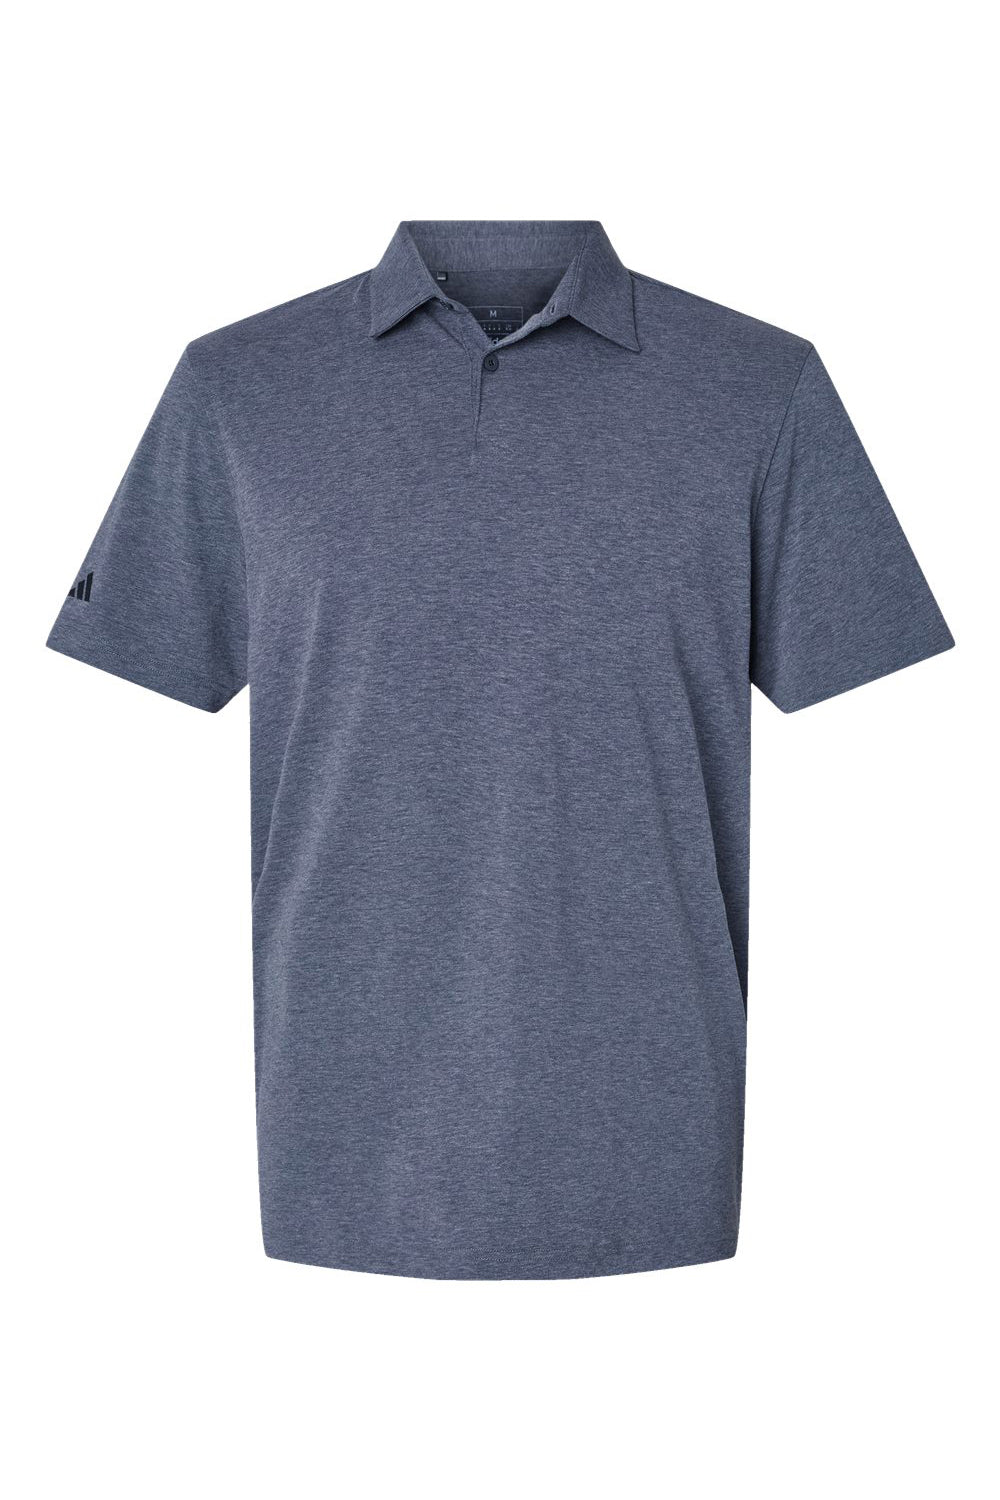 Adidas A590 Mens Short Sleeve Polo Shirt Collegiate Navy Blue Melange Flat Front